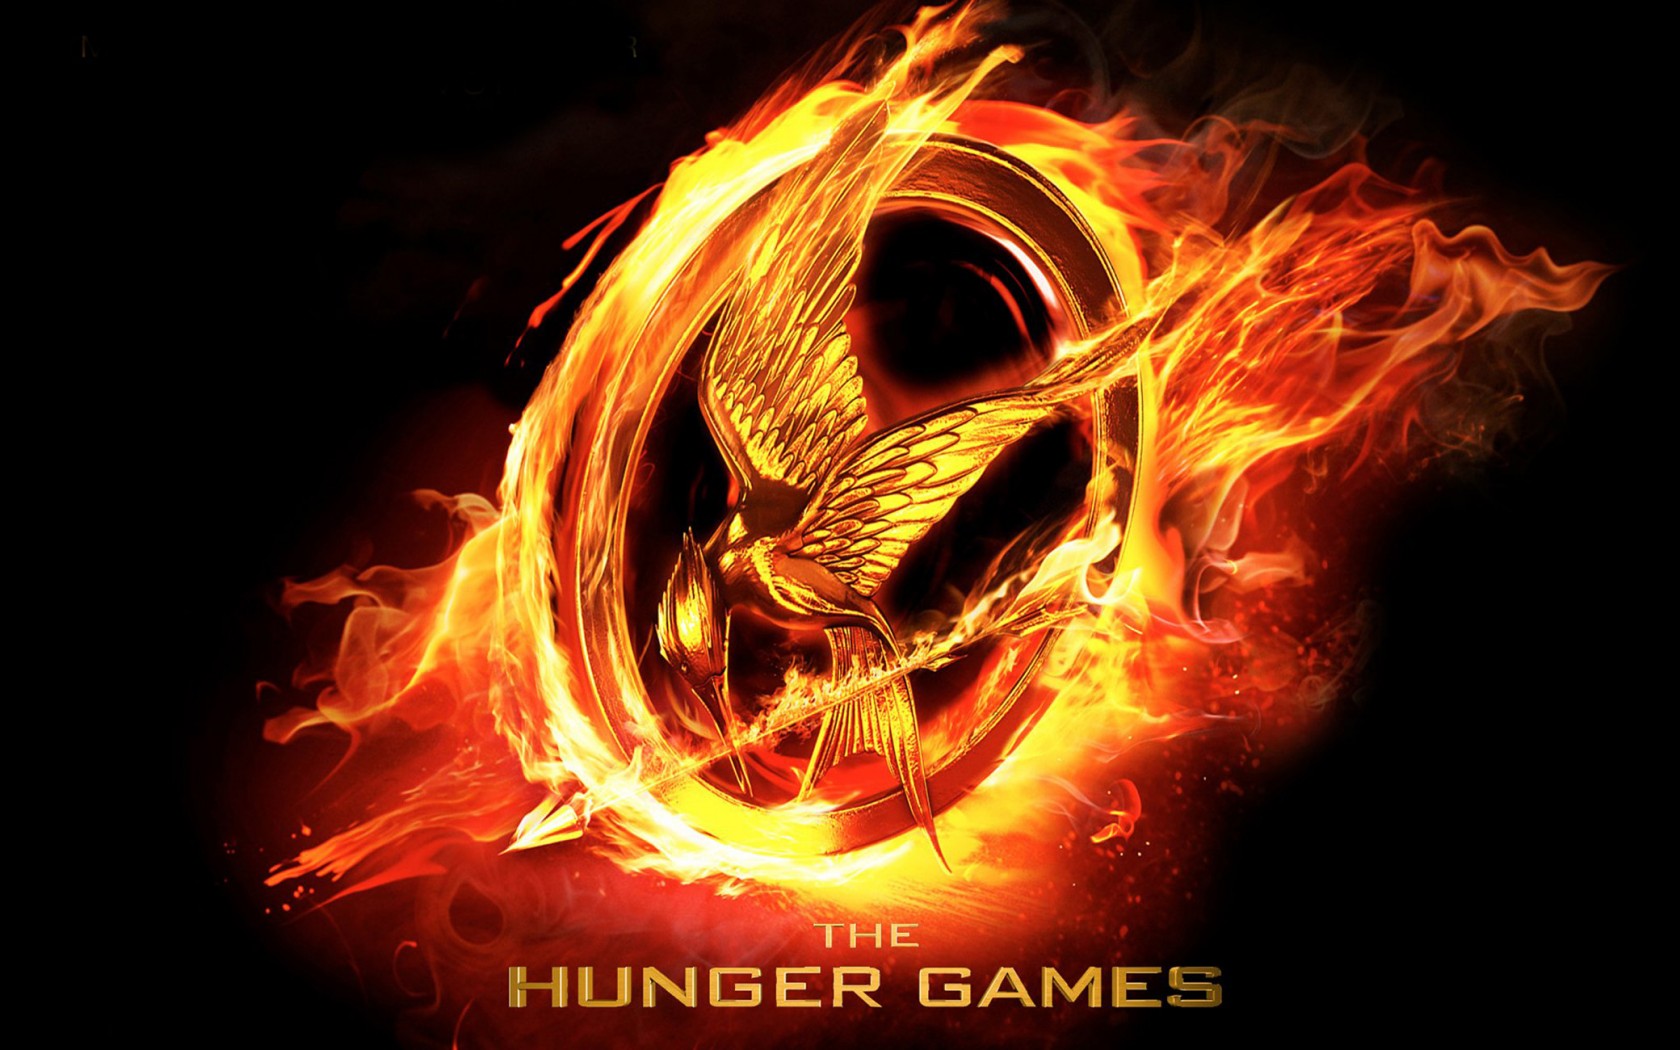 The Hunger Games Catching Fire Wallpaper High